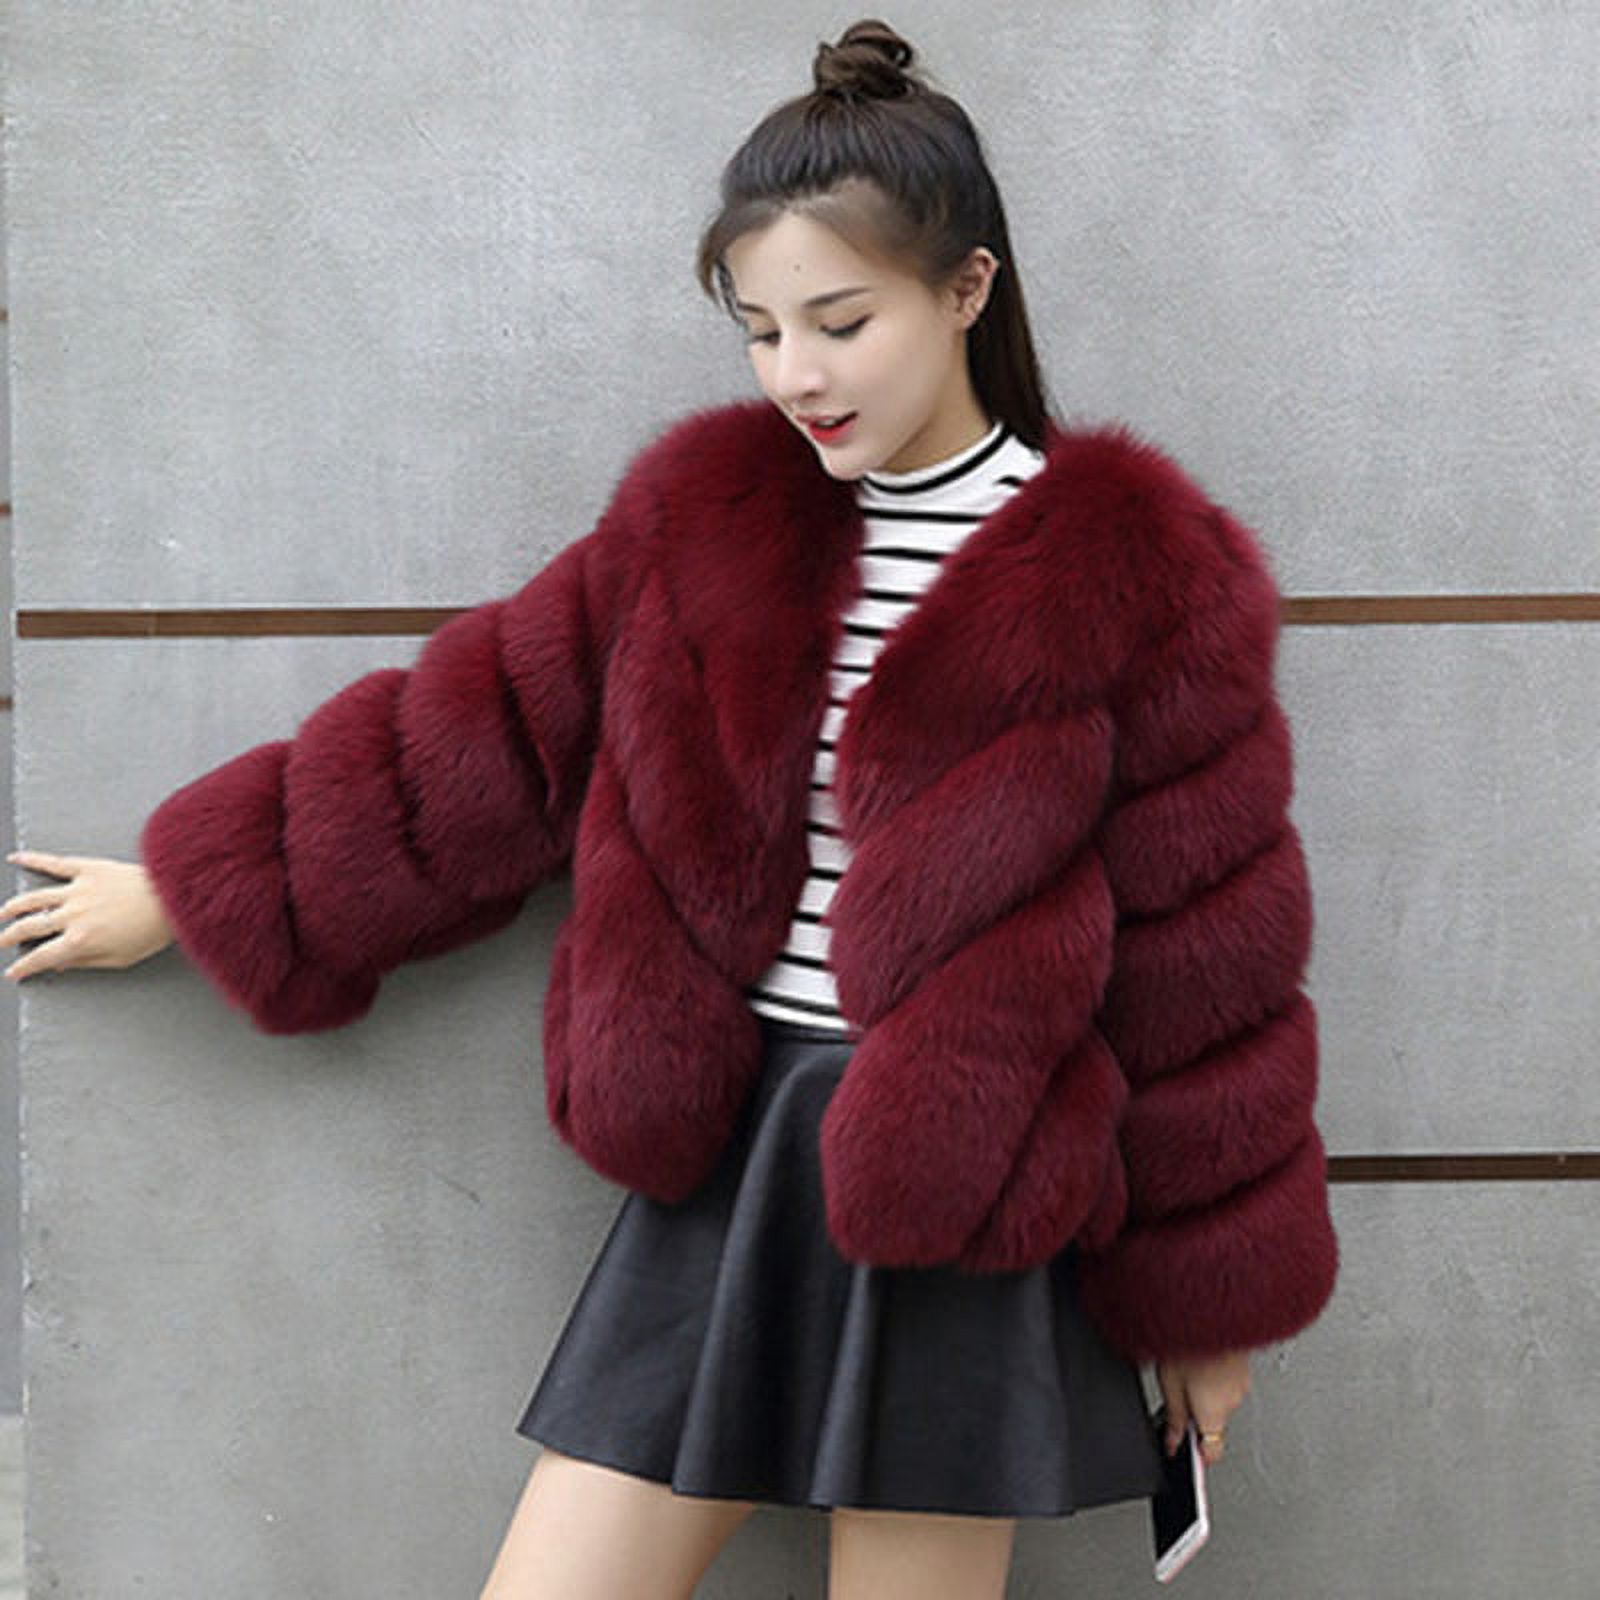 PIKADINGNIS Womens Faux Fur Coat Autumn Winter High Quality Faux Fox Fur Overcoat Female Korean Chic Short Fluffy Plush Jacket 4XL - image 4 of 6